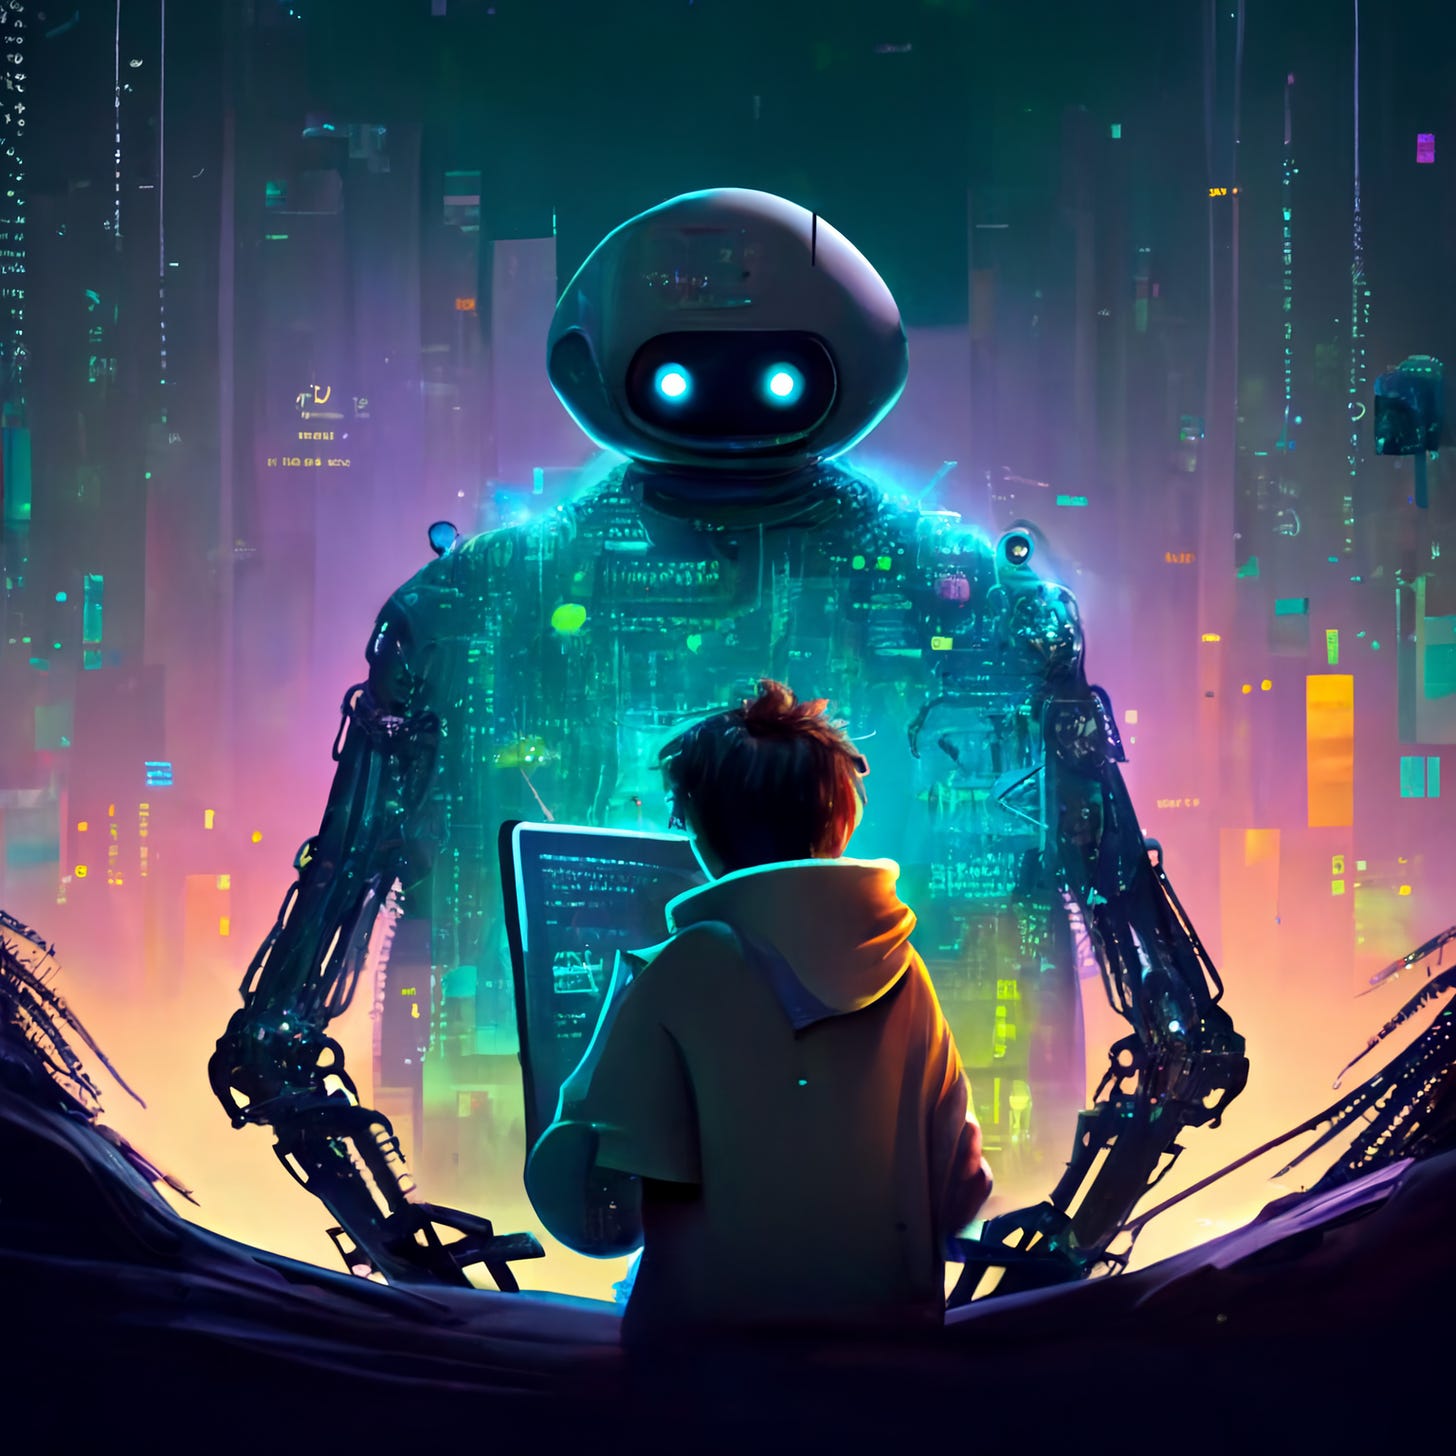 Man holding laptop looking at big futuristic robot